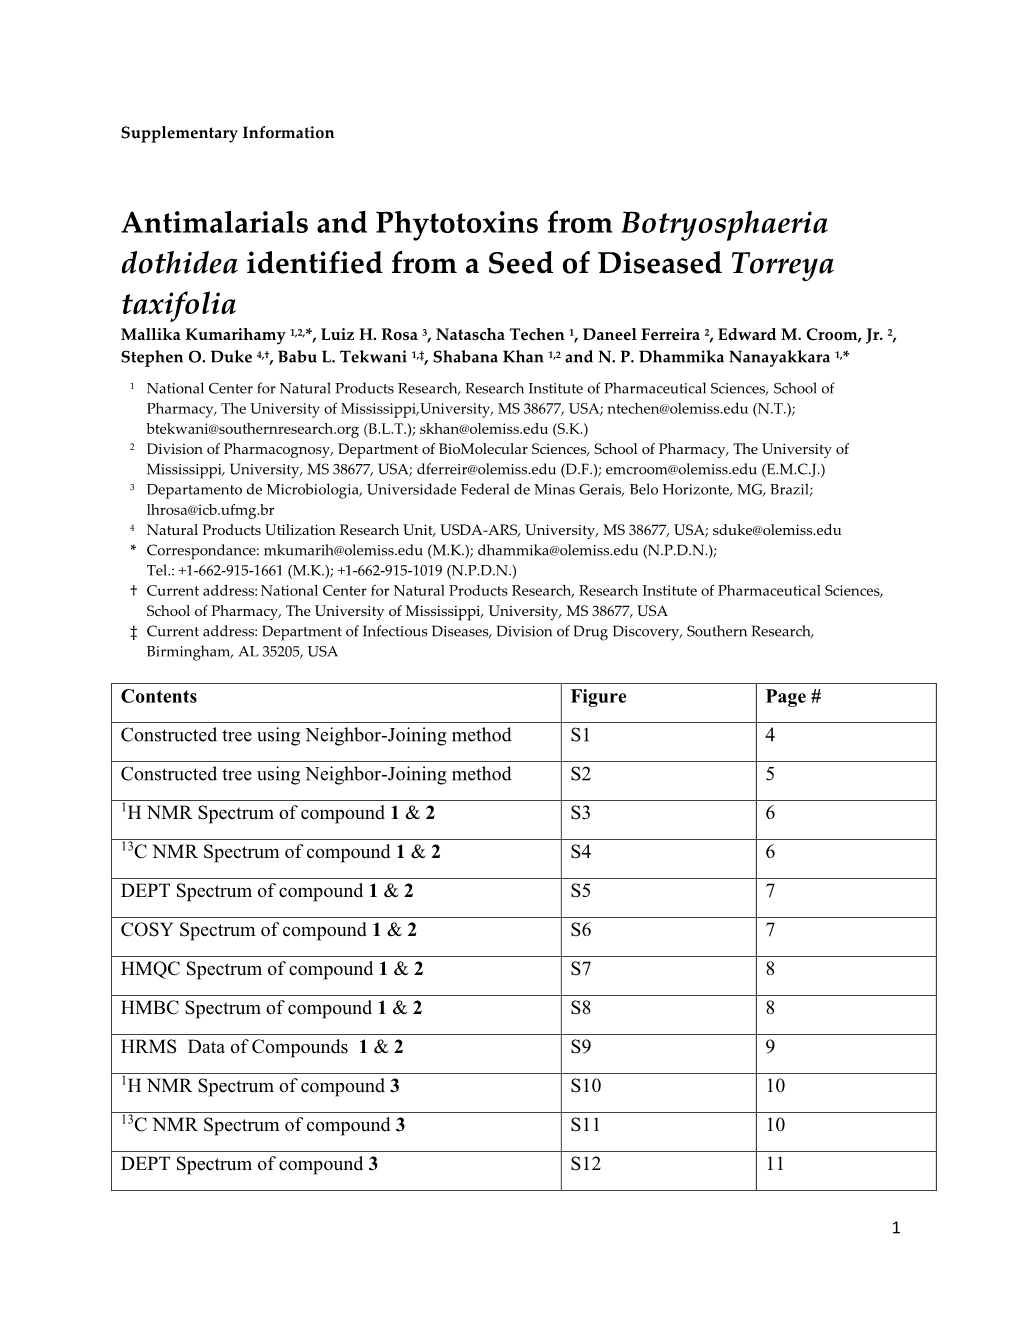 Antimalarials and Phytotoxins from Botryosphaeria Dothidea Identified from a Seed of Diseased Torreya Taxifolia Mallika Kumarihamy 1,2,*, Luiz H